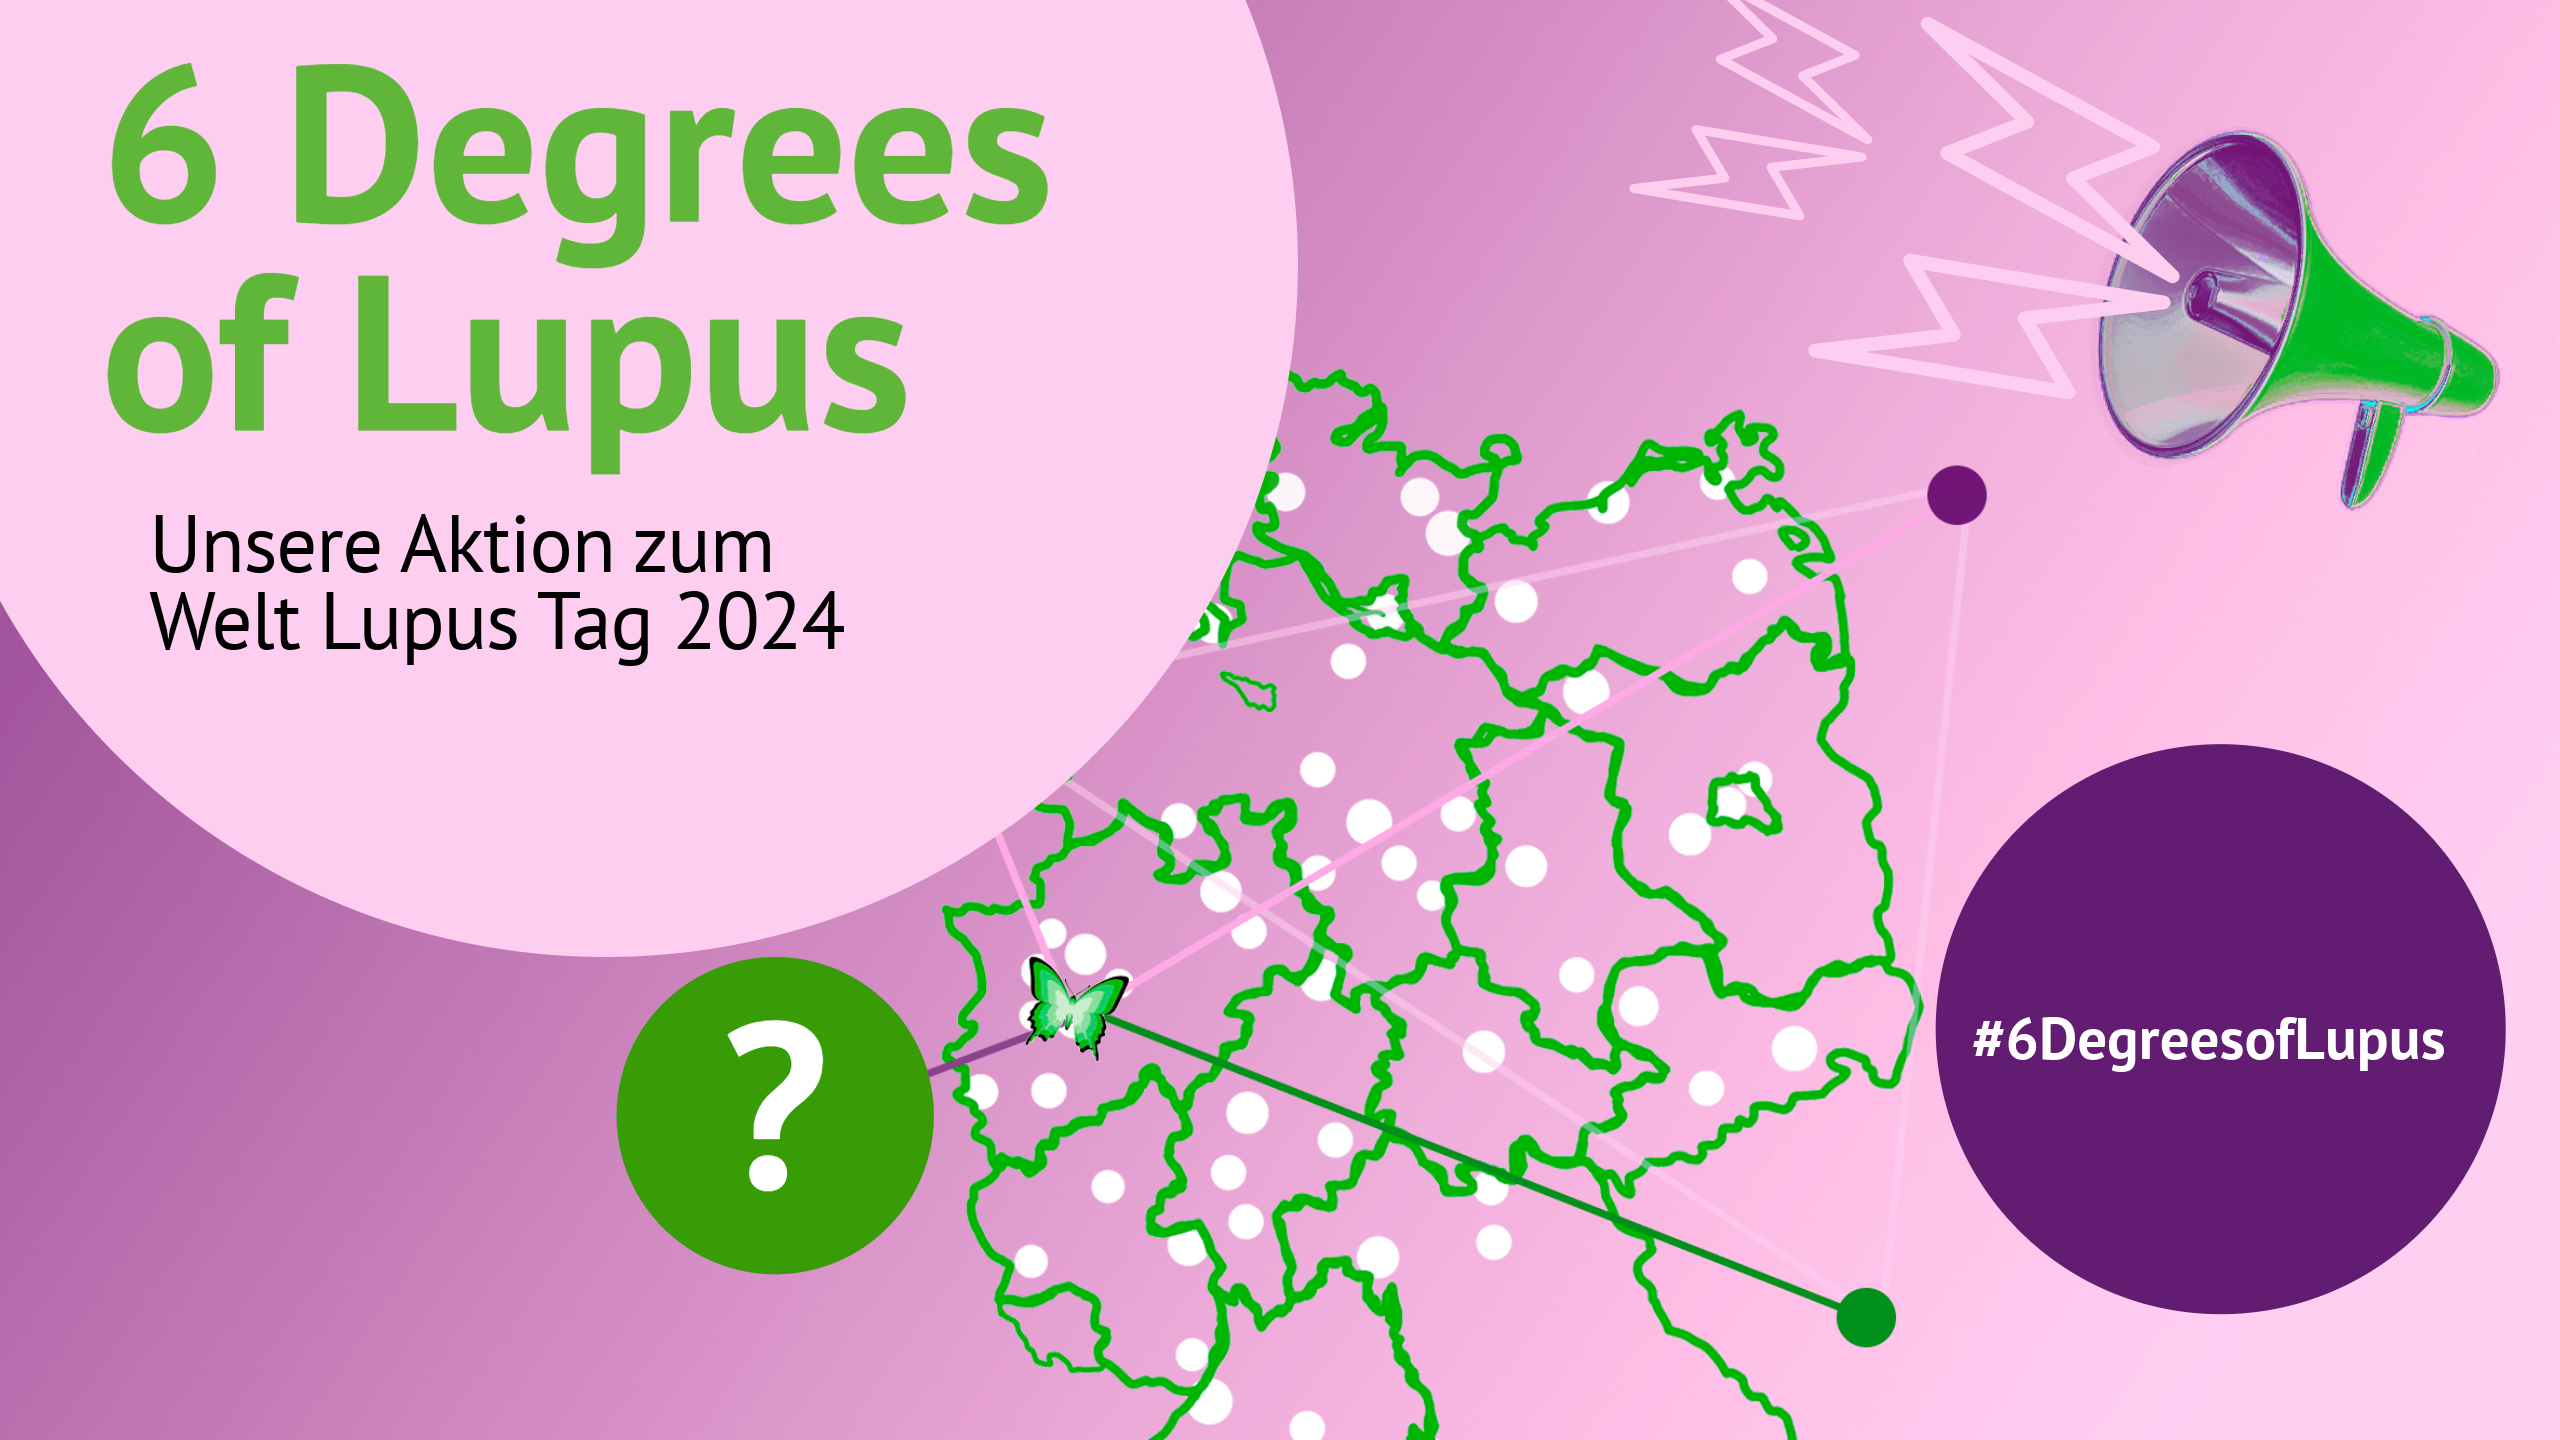 6 Degrees of Lupus 
Unsere Aktion zum Welt Lupus Tag 2024  mit dem Hashtag #6DegreesOf Lupus